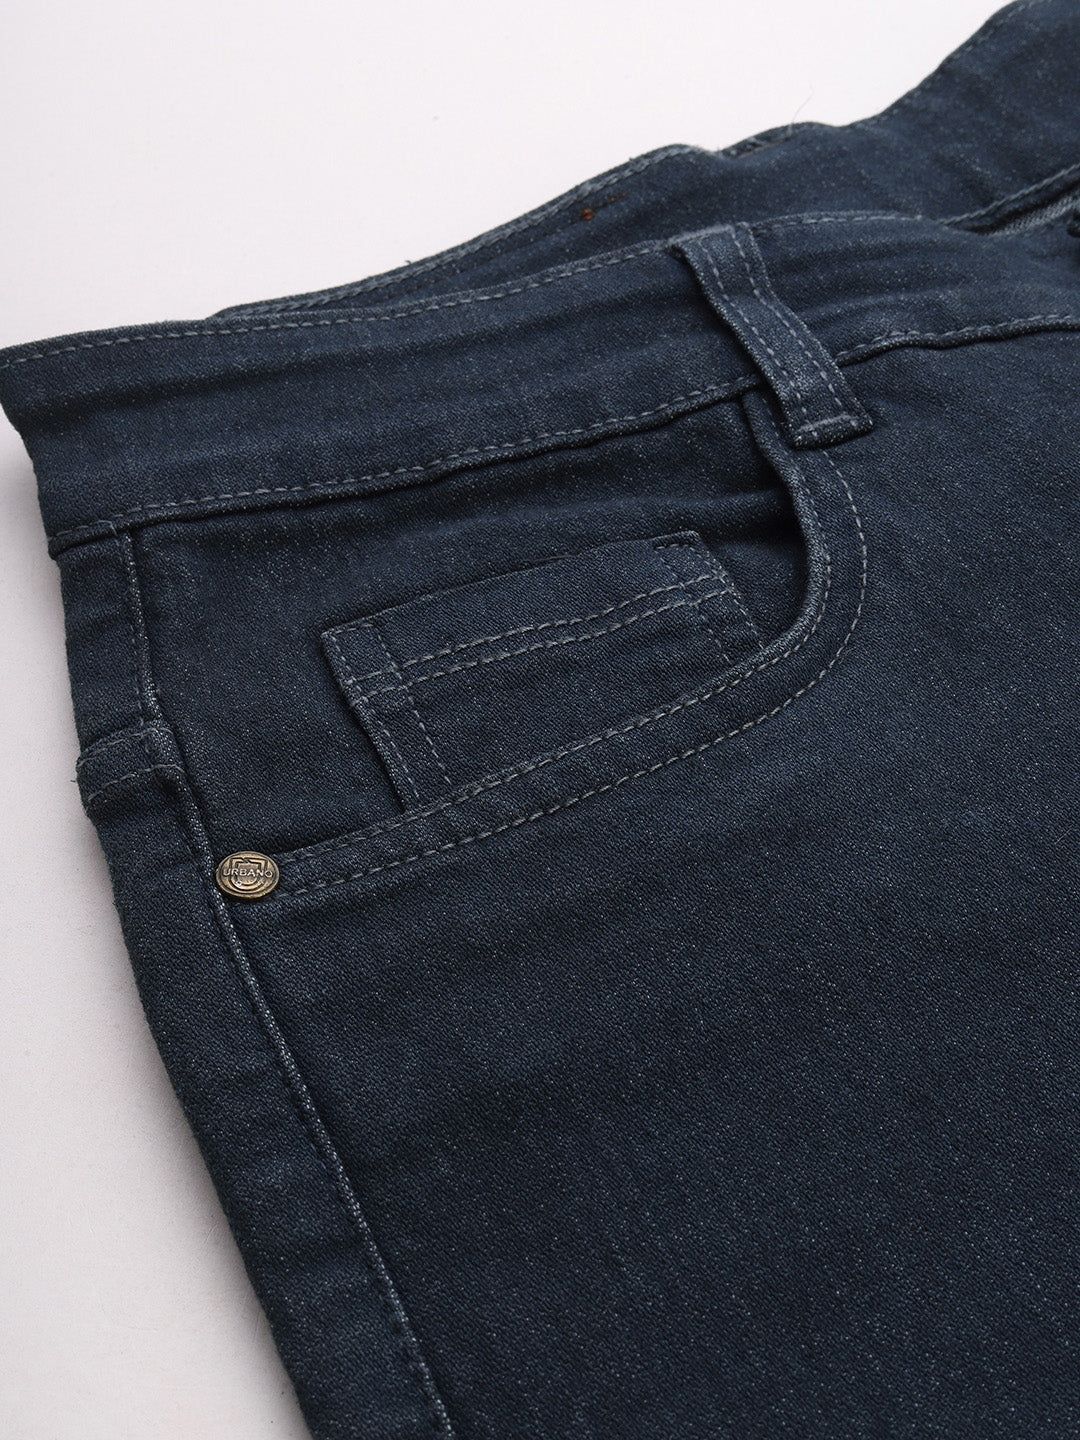 Men's Dark Grey Slim Fit Denim Jeans Stretchable